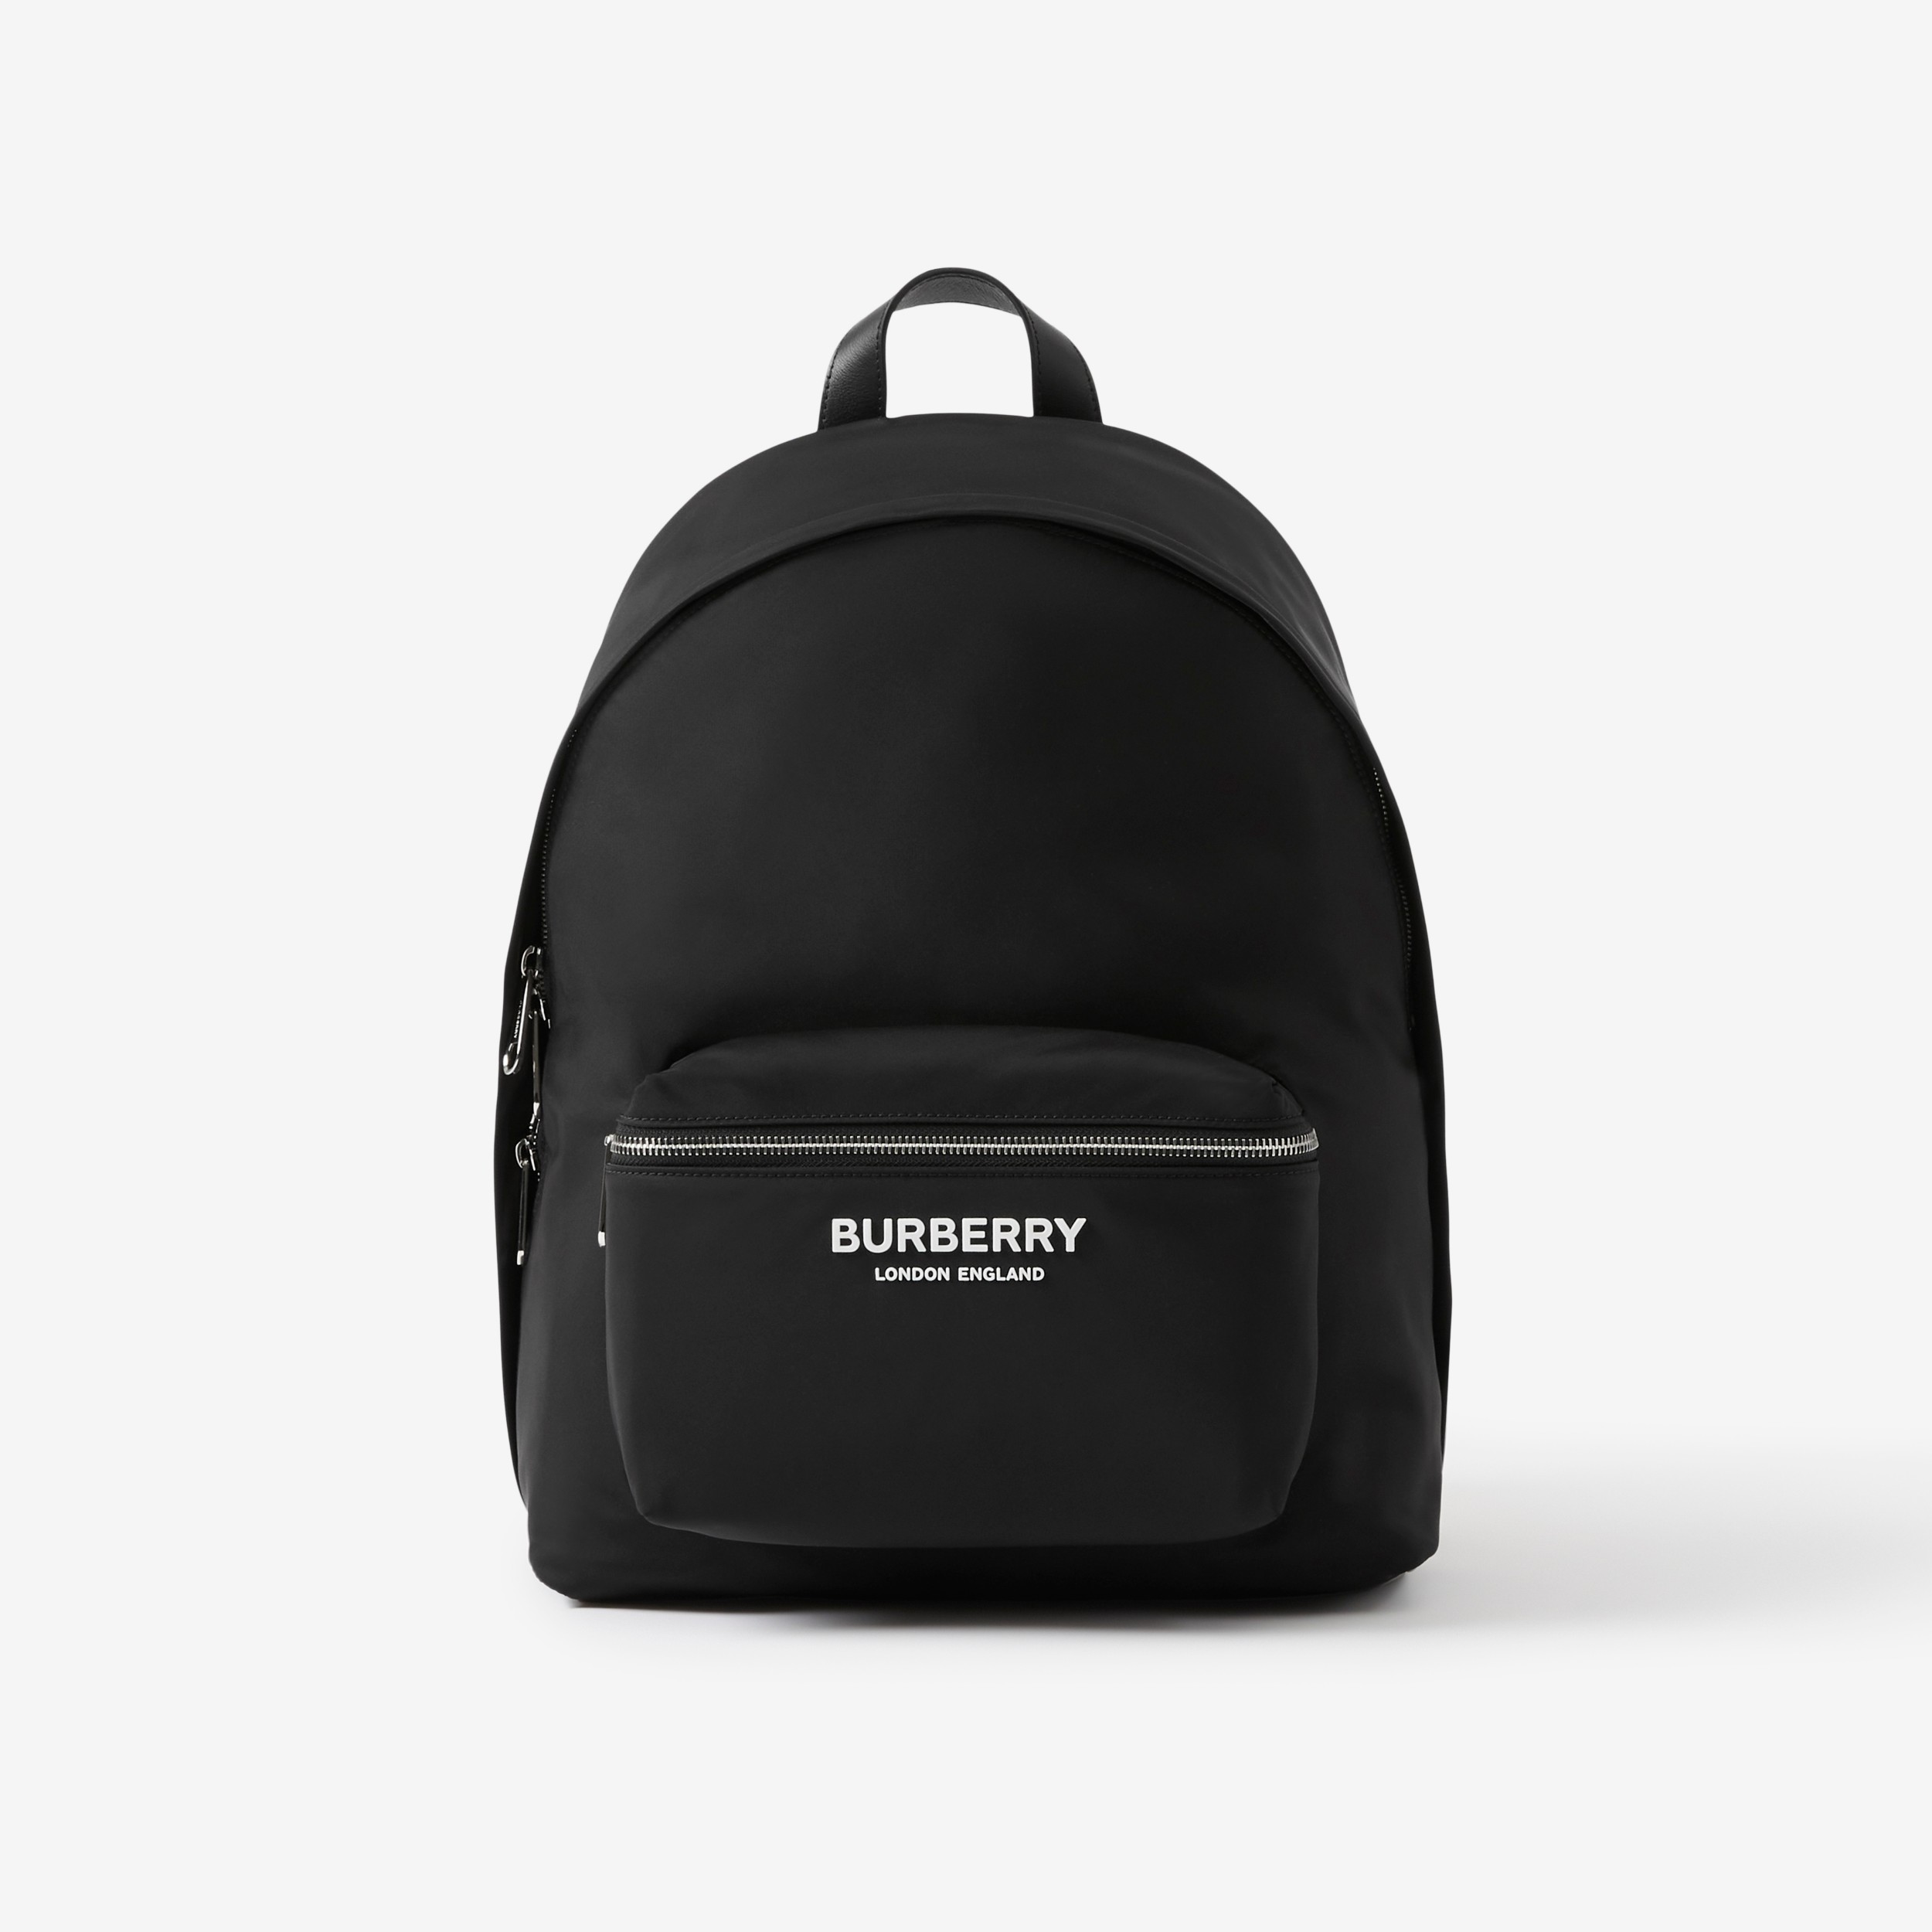 Actualizar 62+ imagen burberry london england backpack